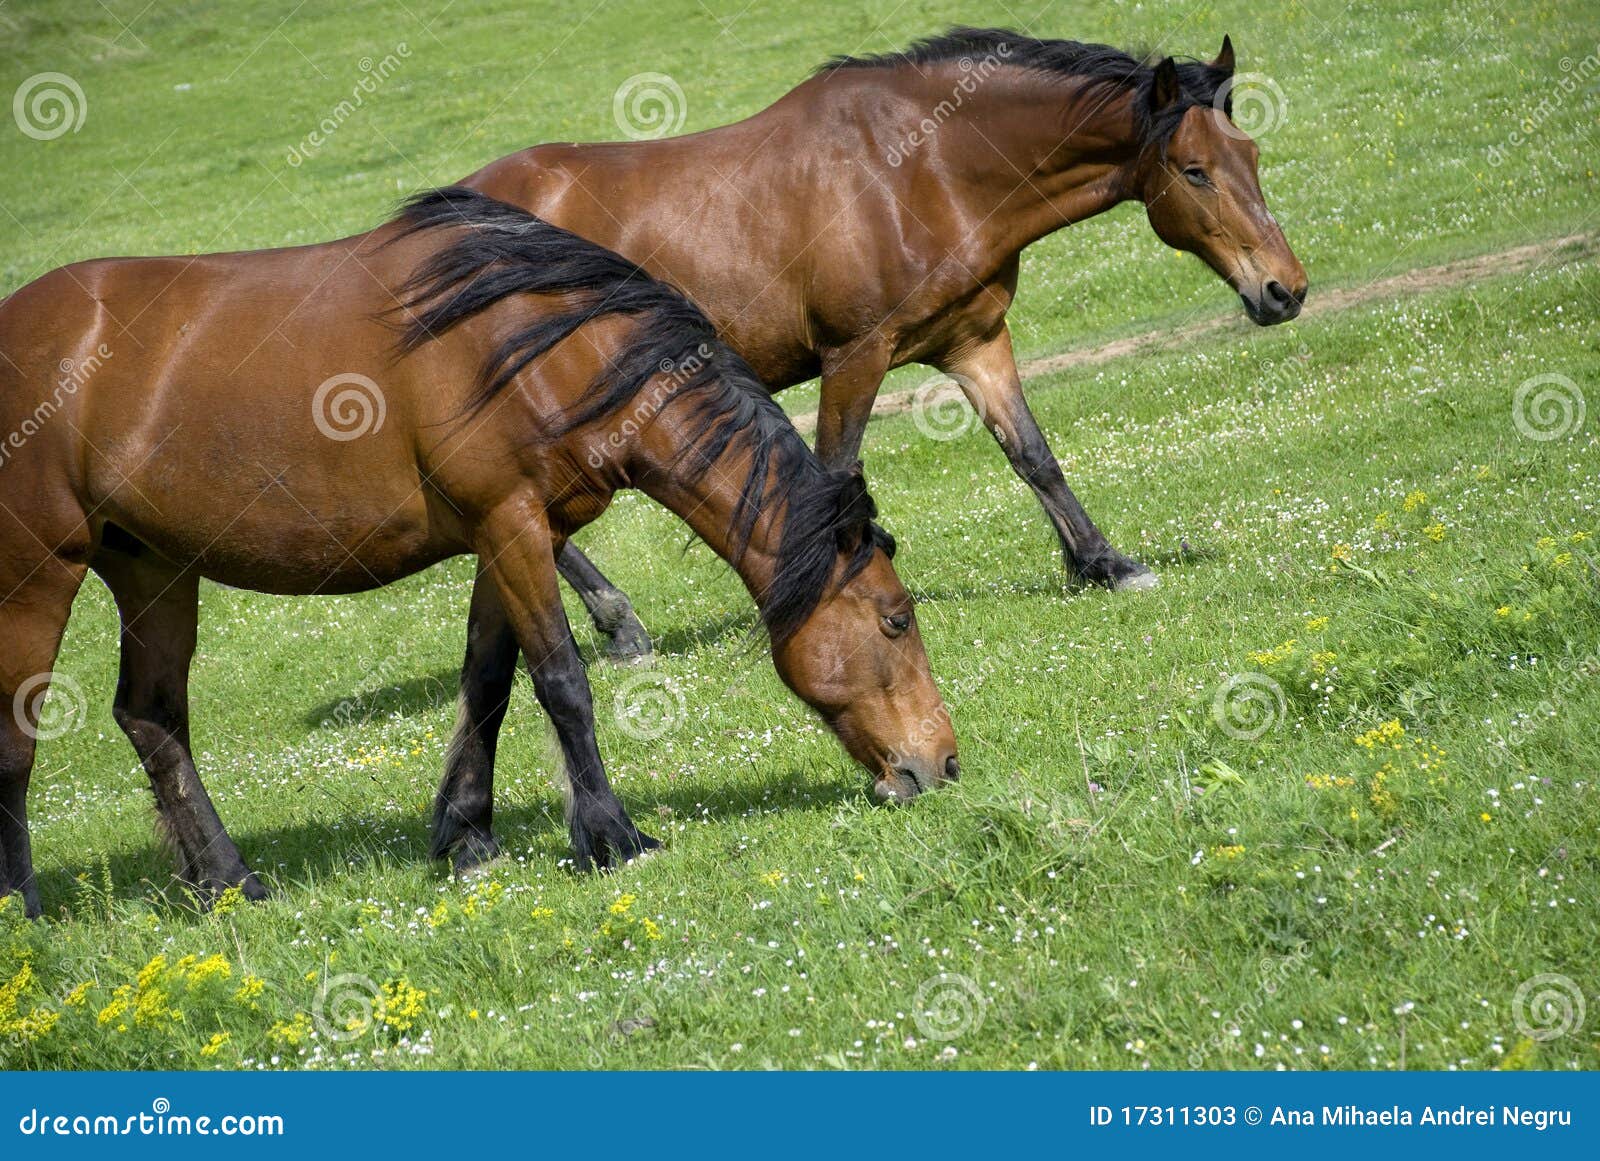 grazing brown horses